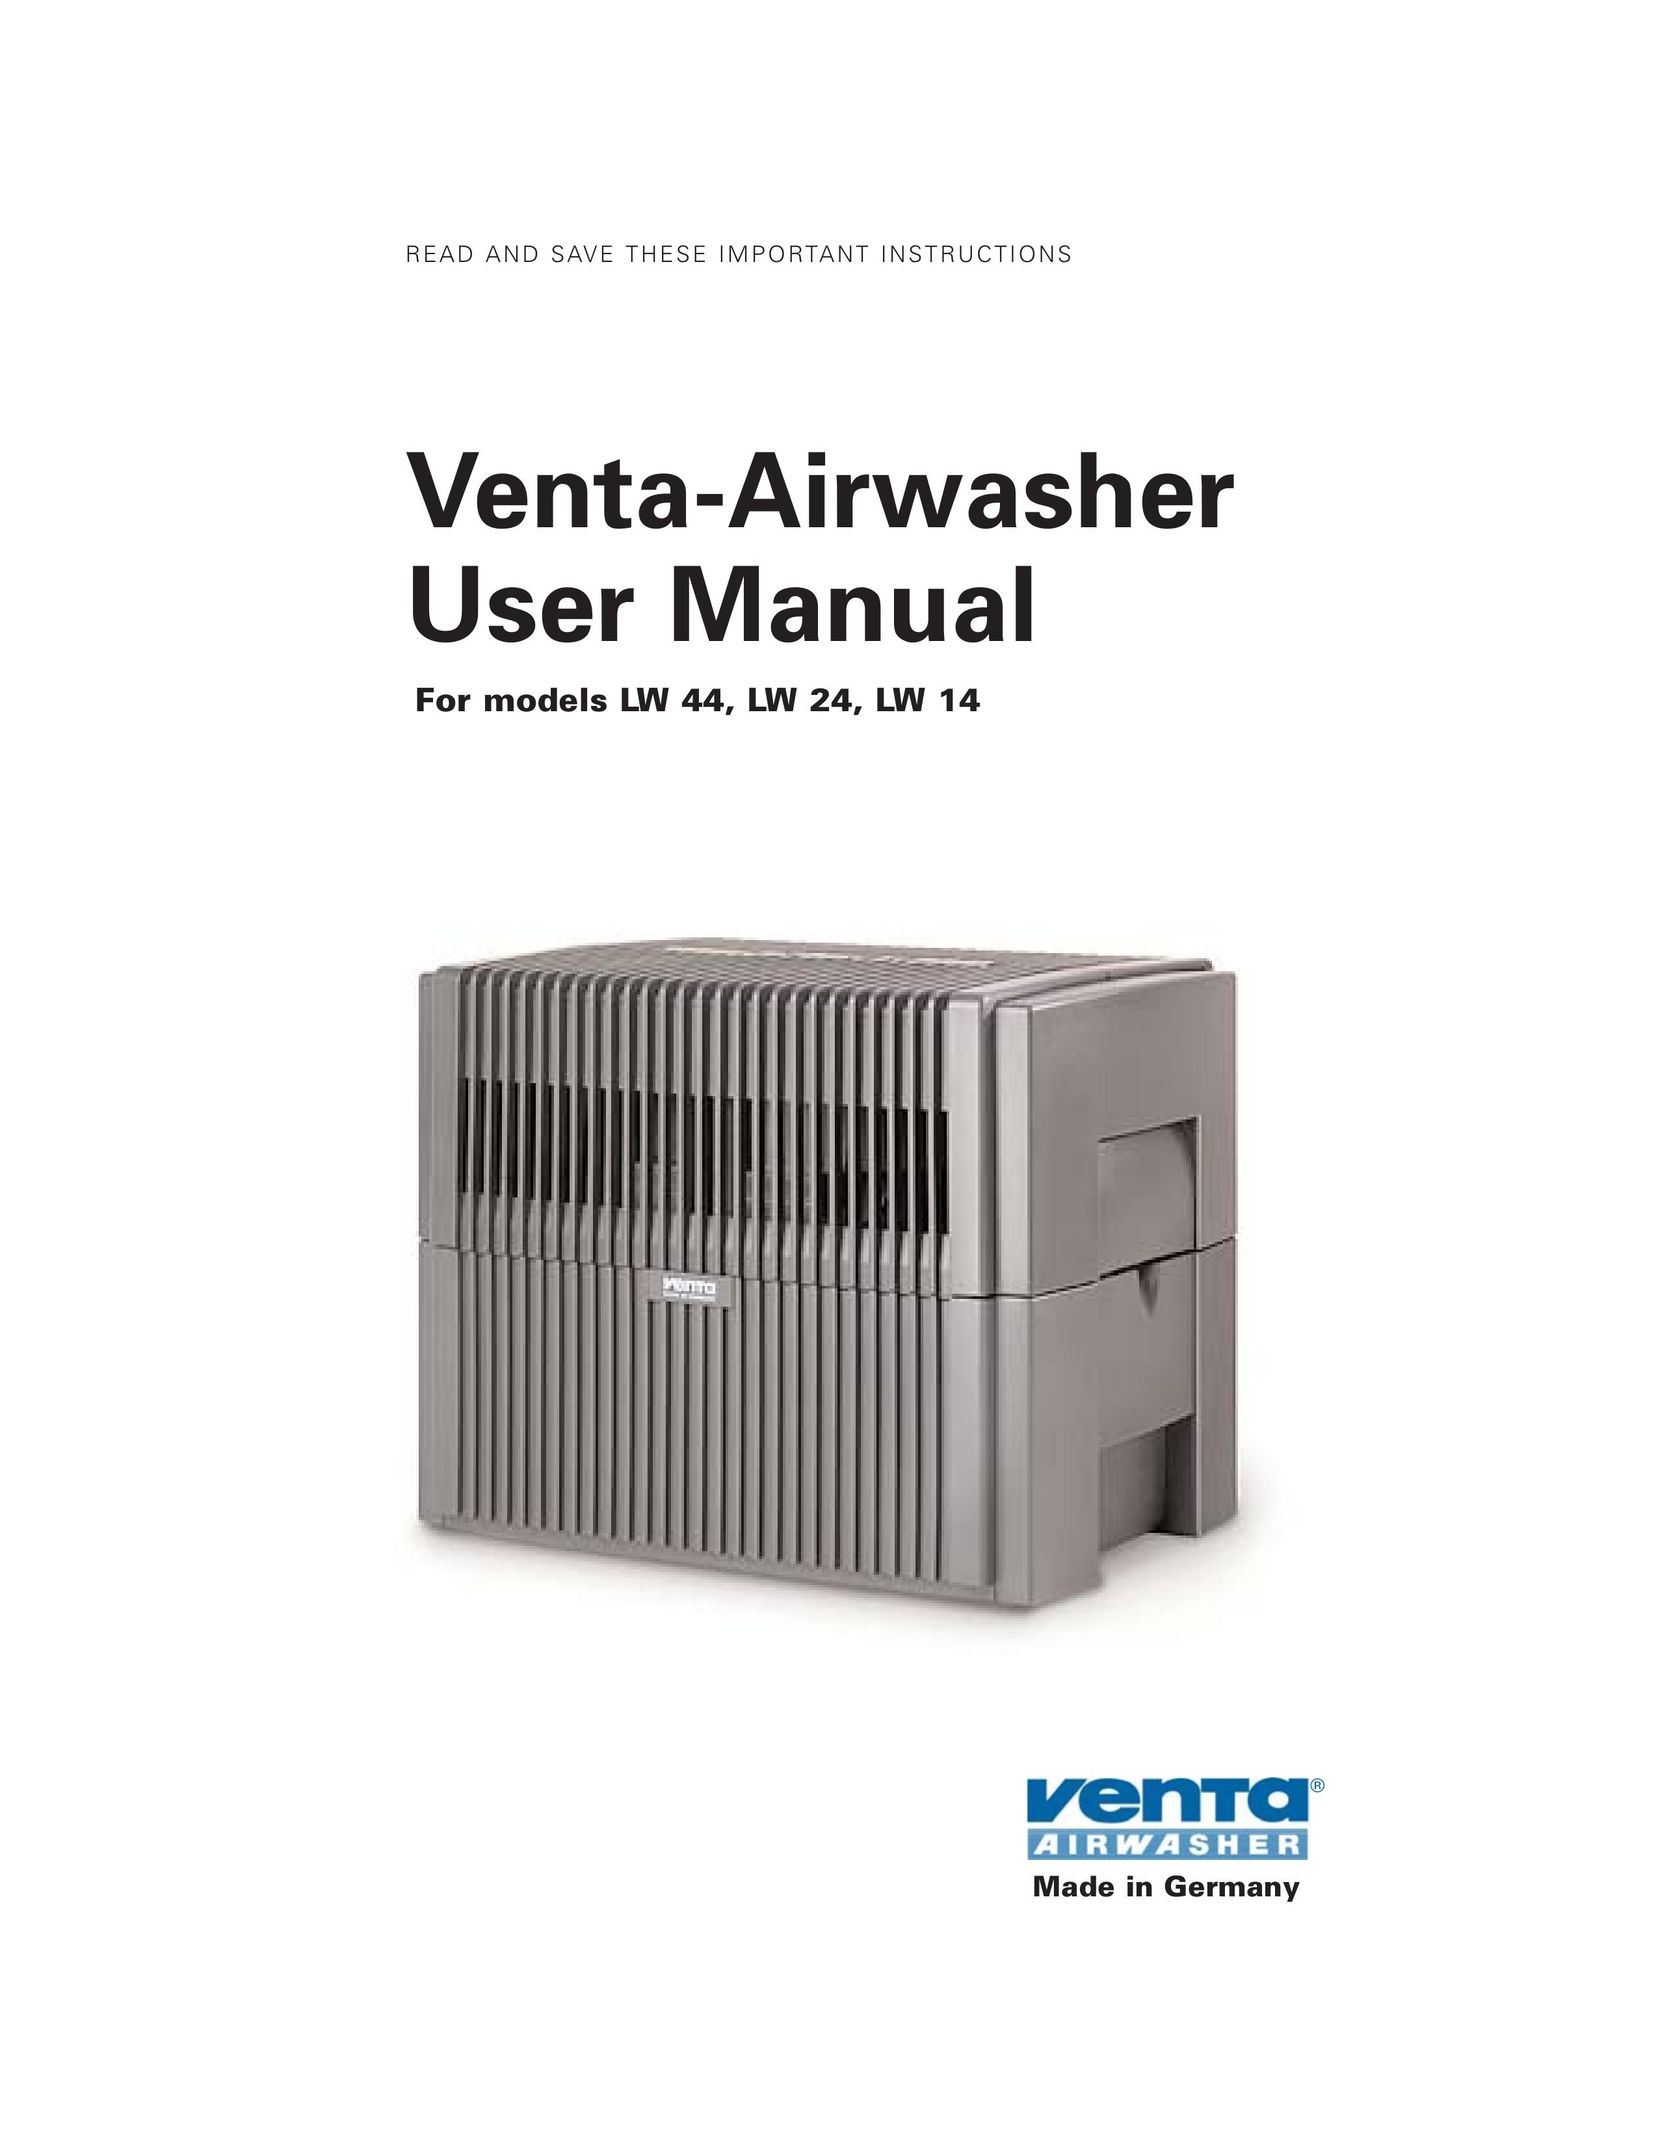 Venta Airwasher LW 14 Humidifier User Manual